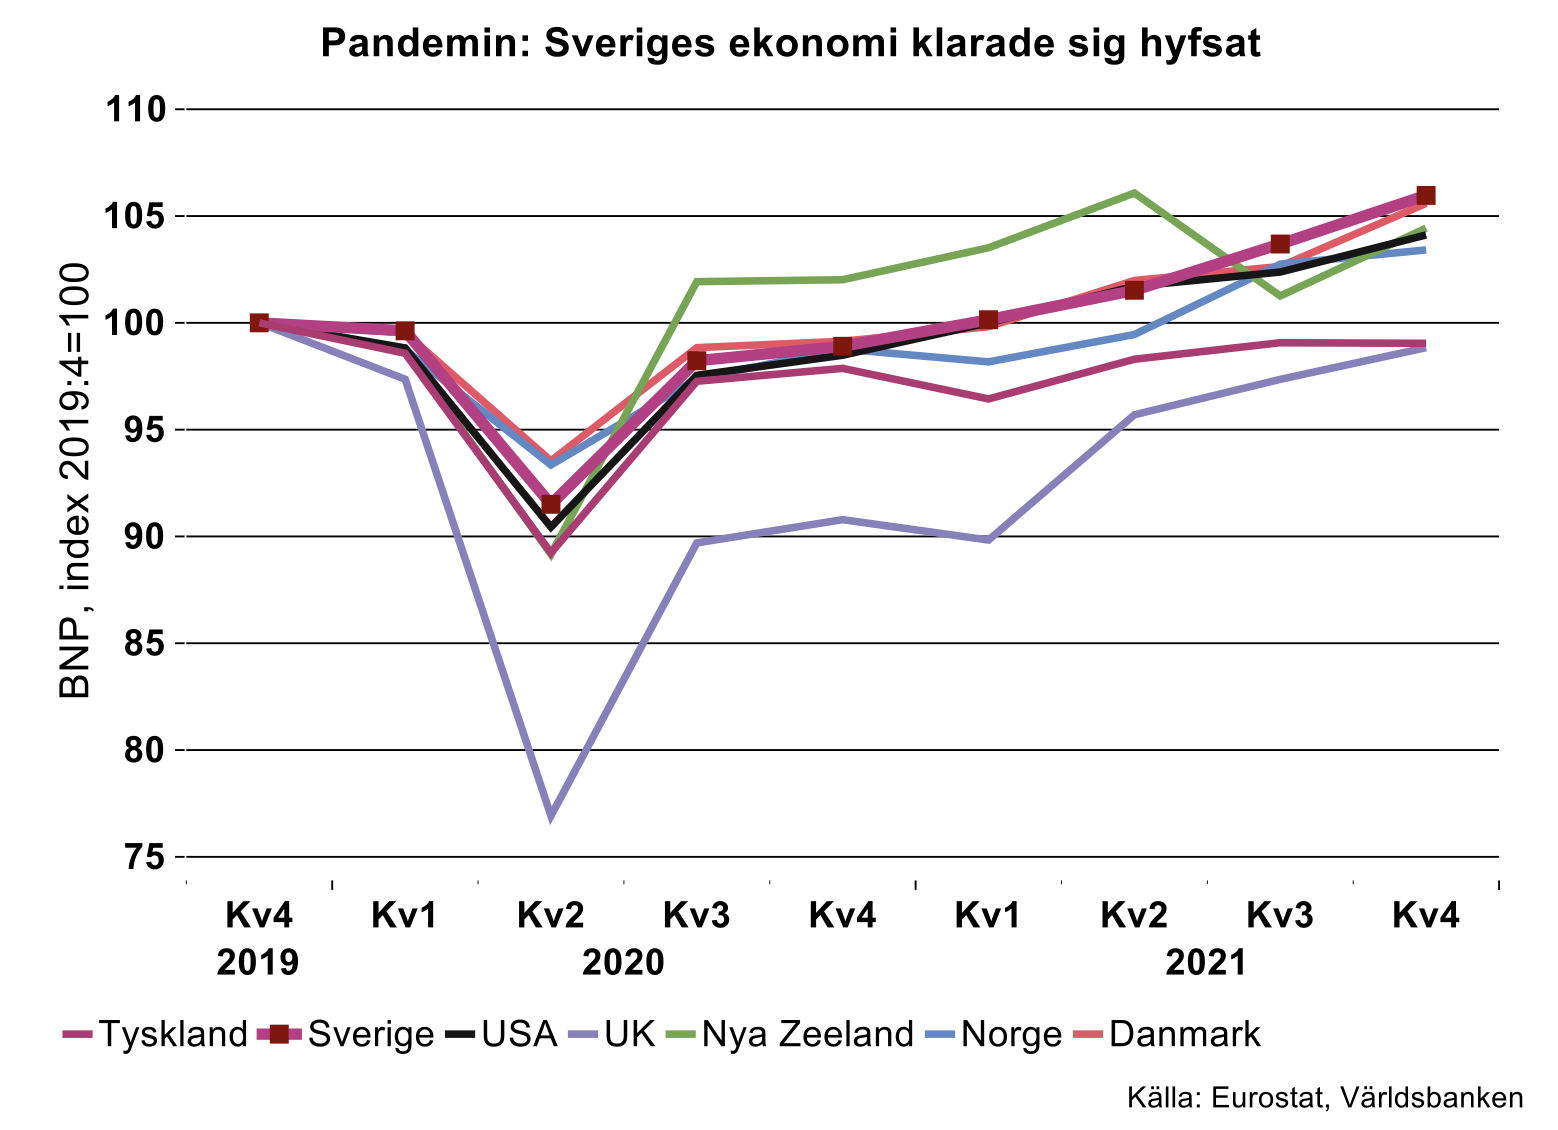 Pandemin - sveriges ekonomi klarade sig hyfsat